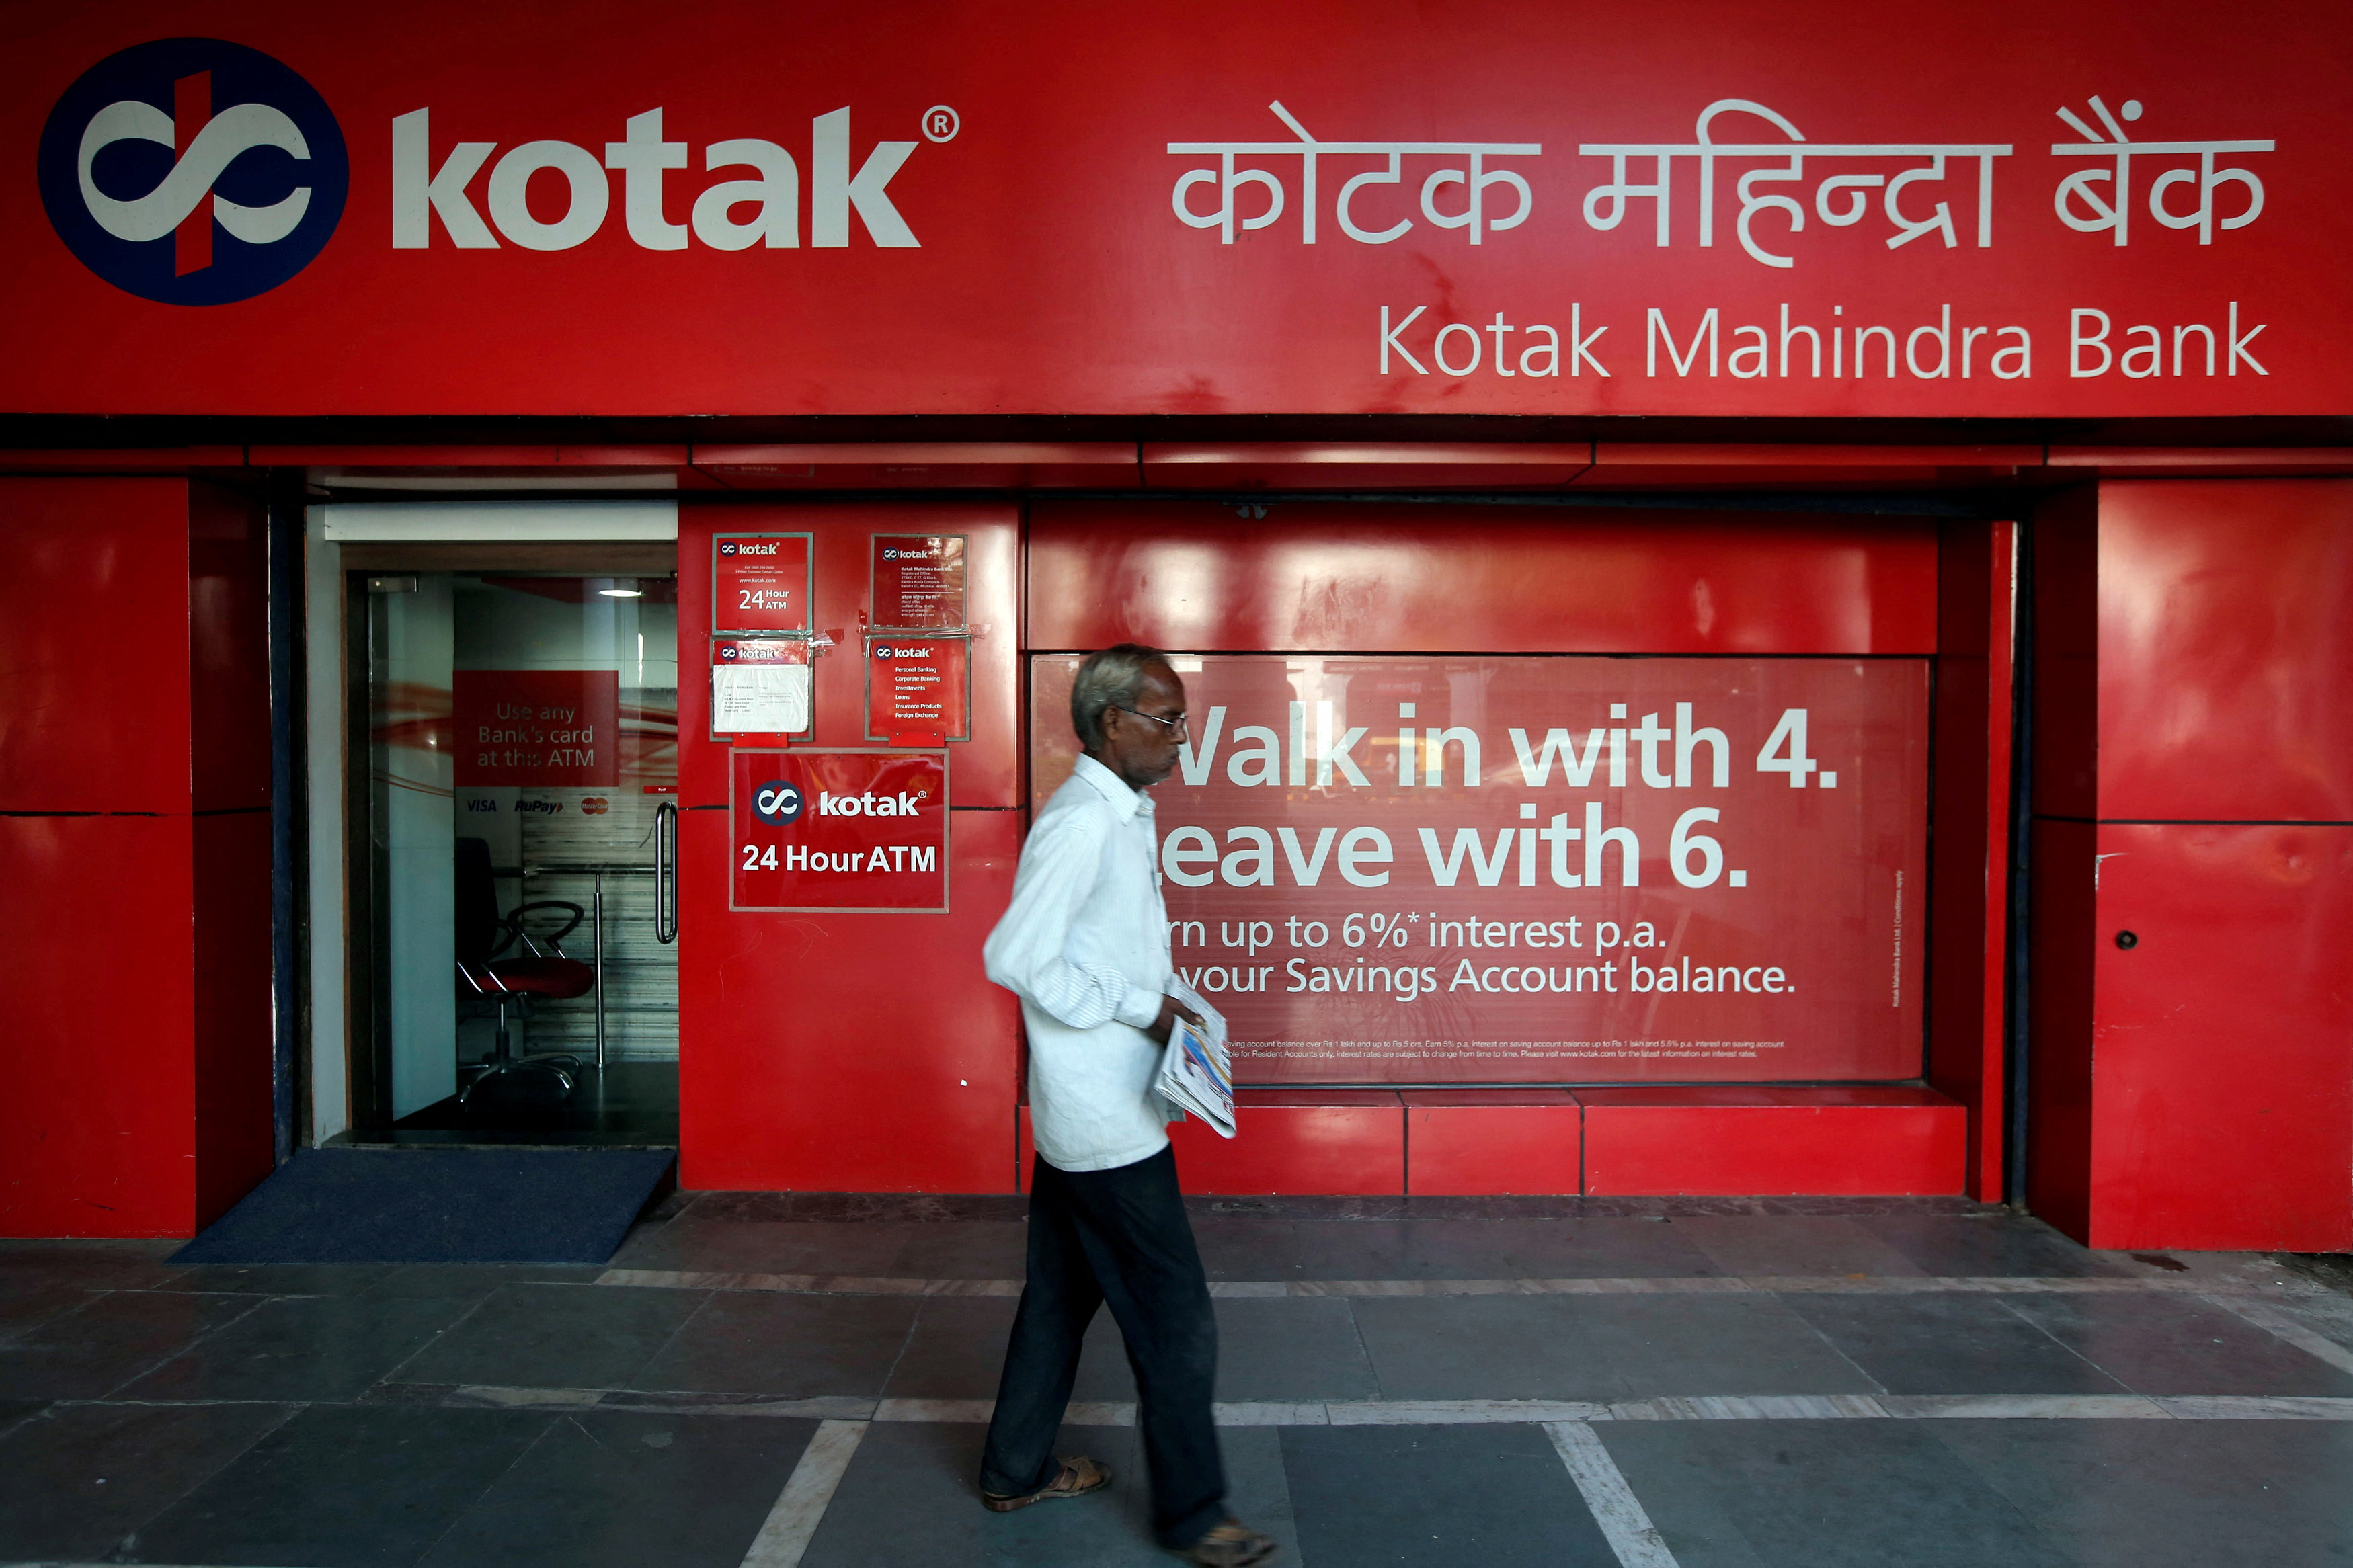 A man walks past the Kotak Mahindra Bank branch in New Delhi